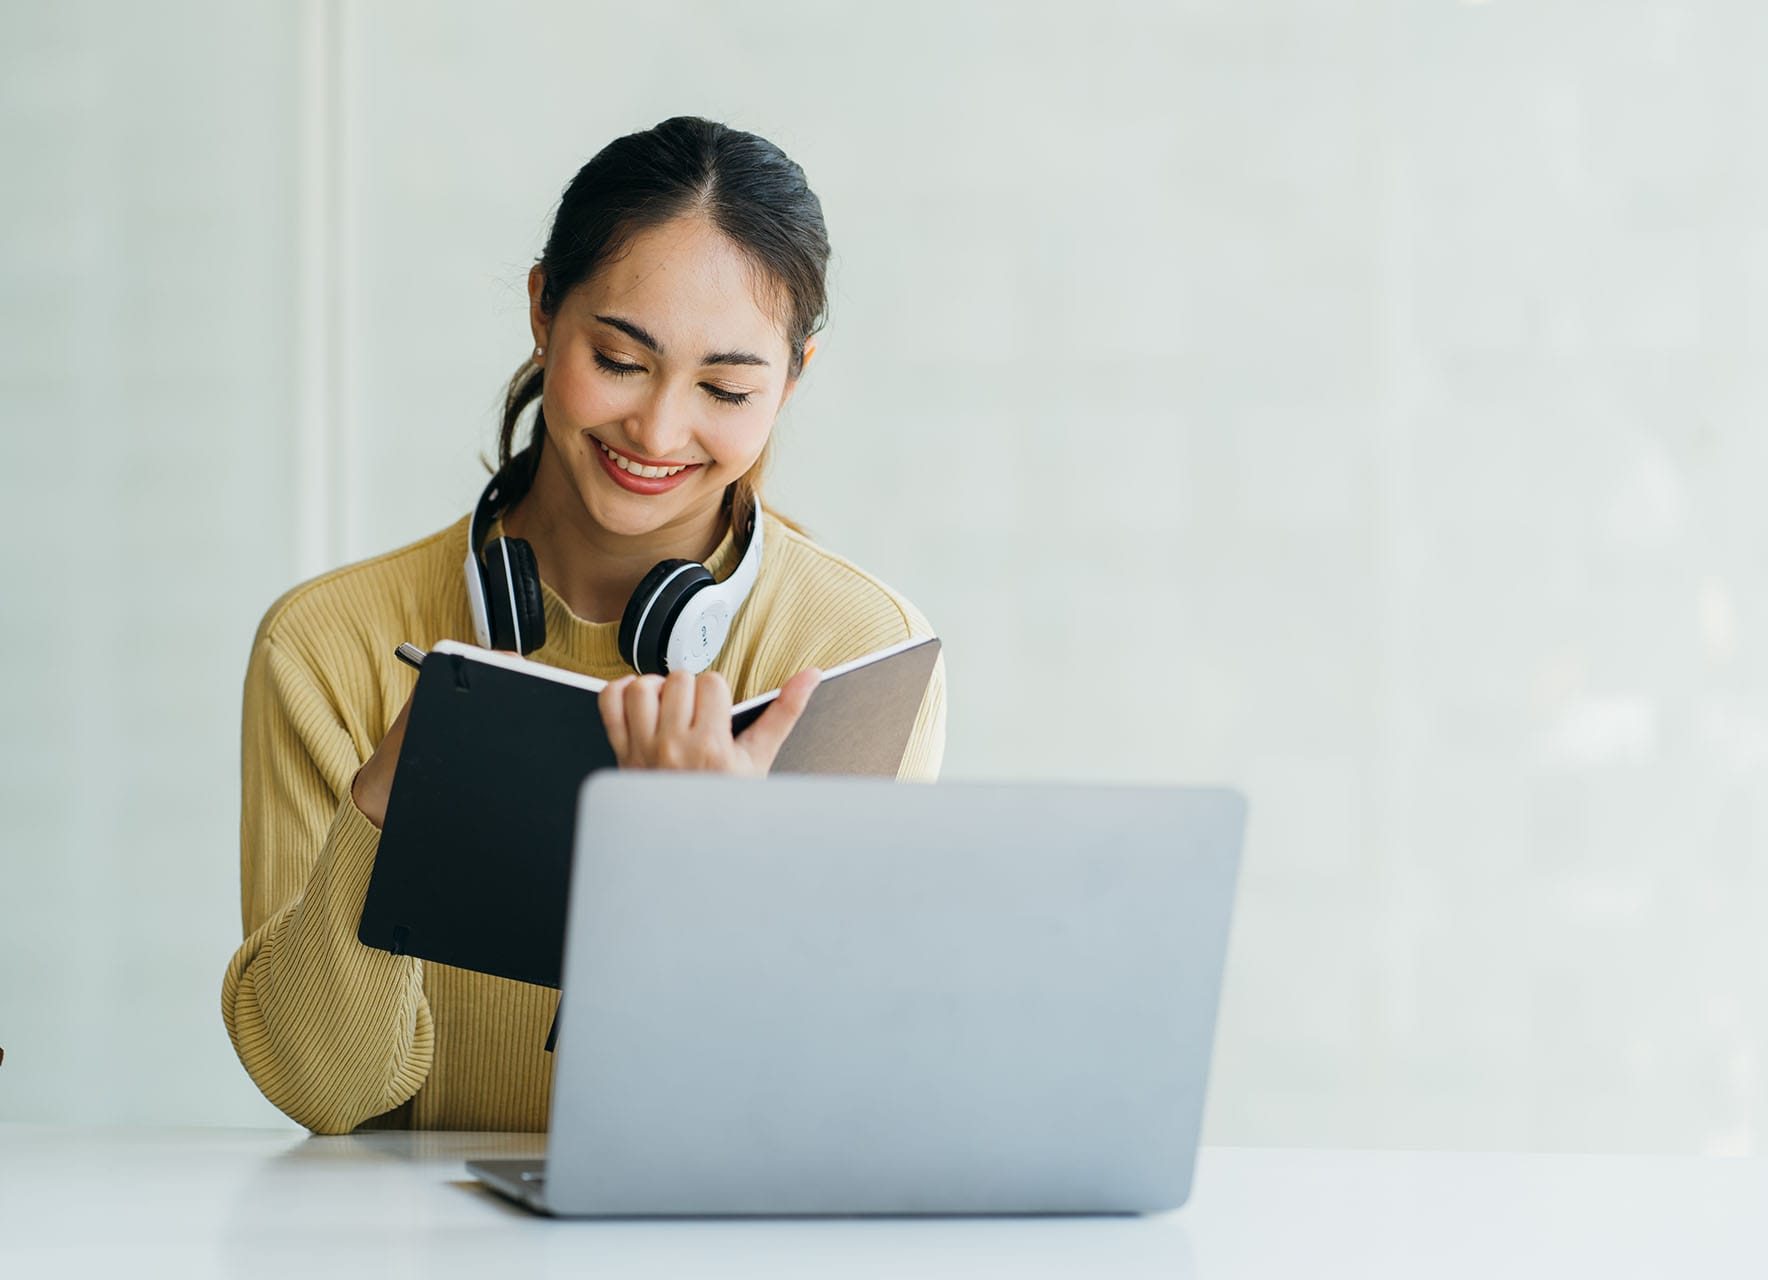 Smiling woman looking at laptop scree